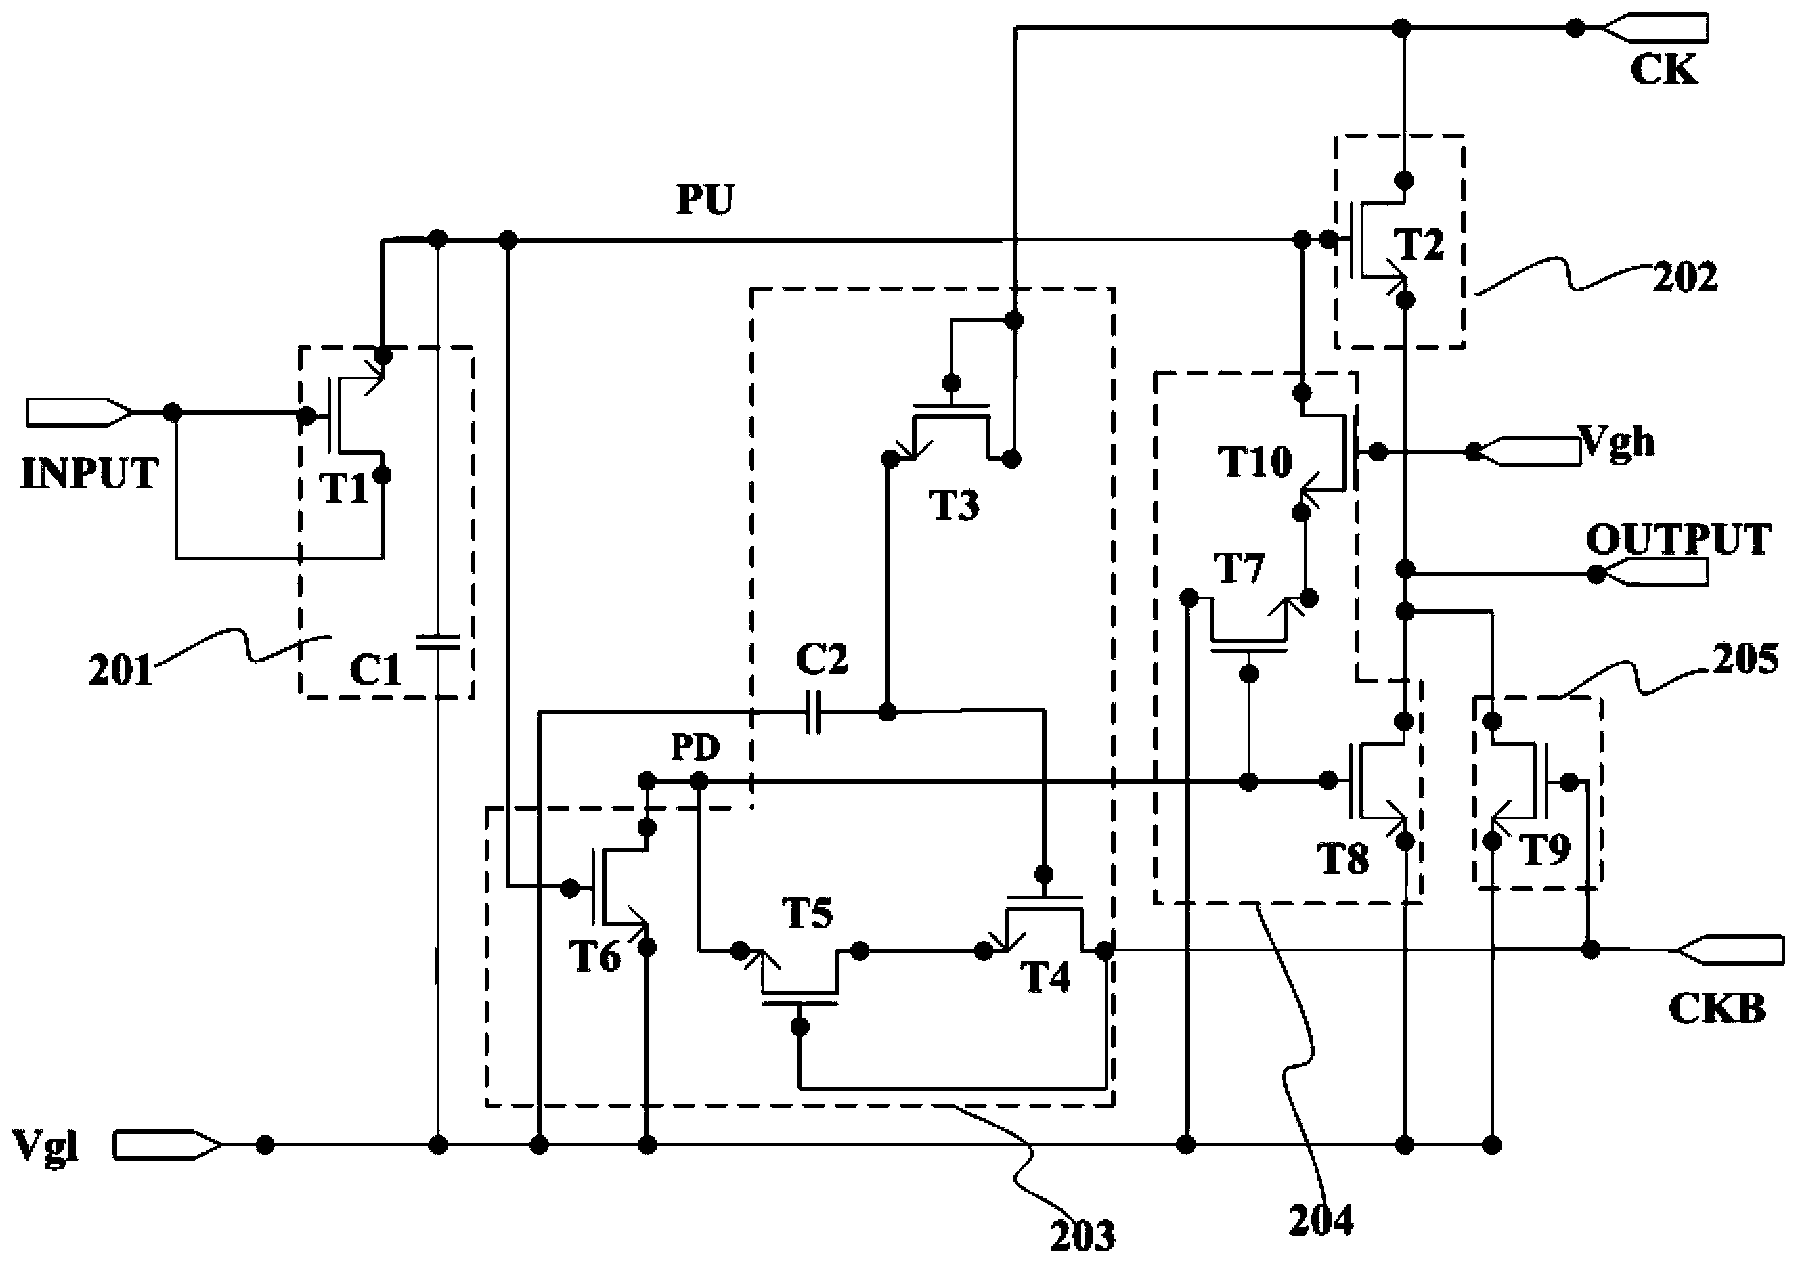 Shifting register unit, gate drive circuit and display circuit